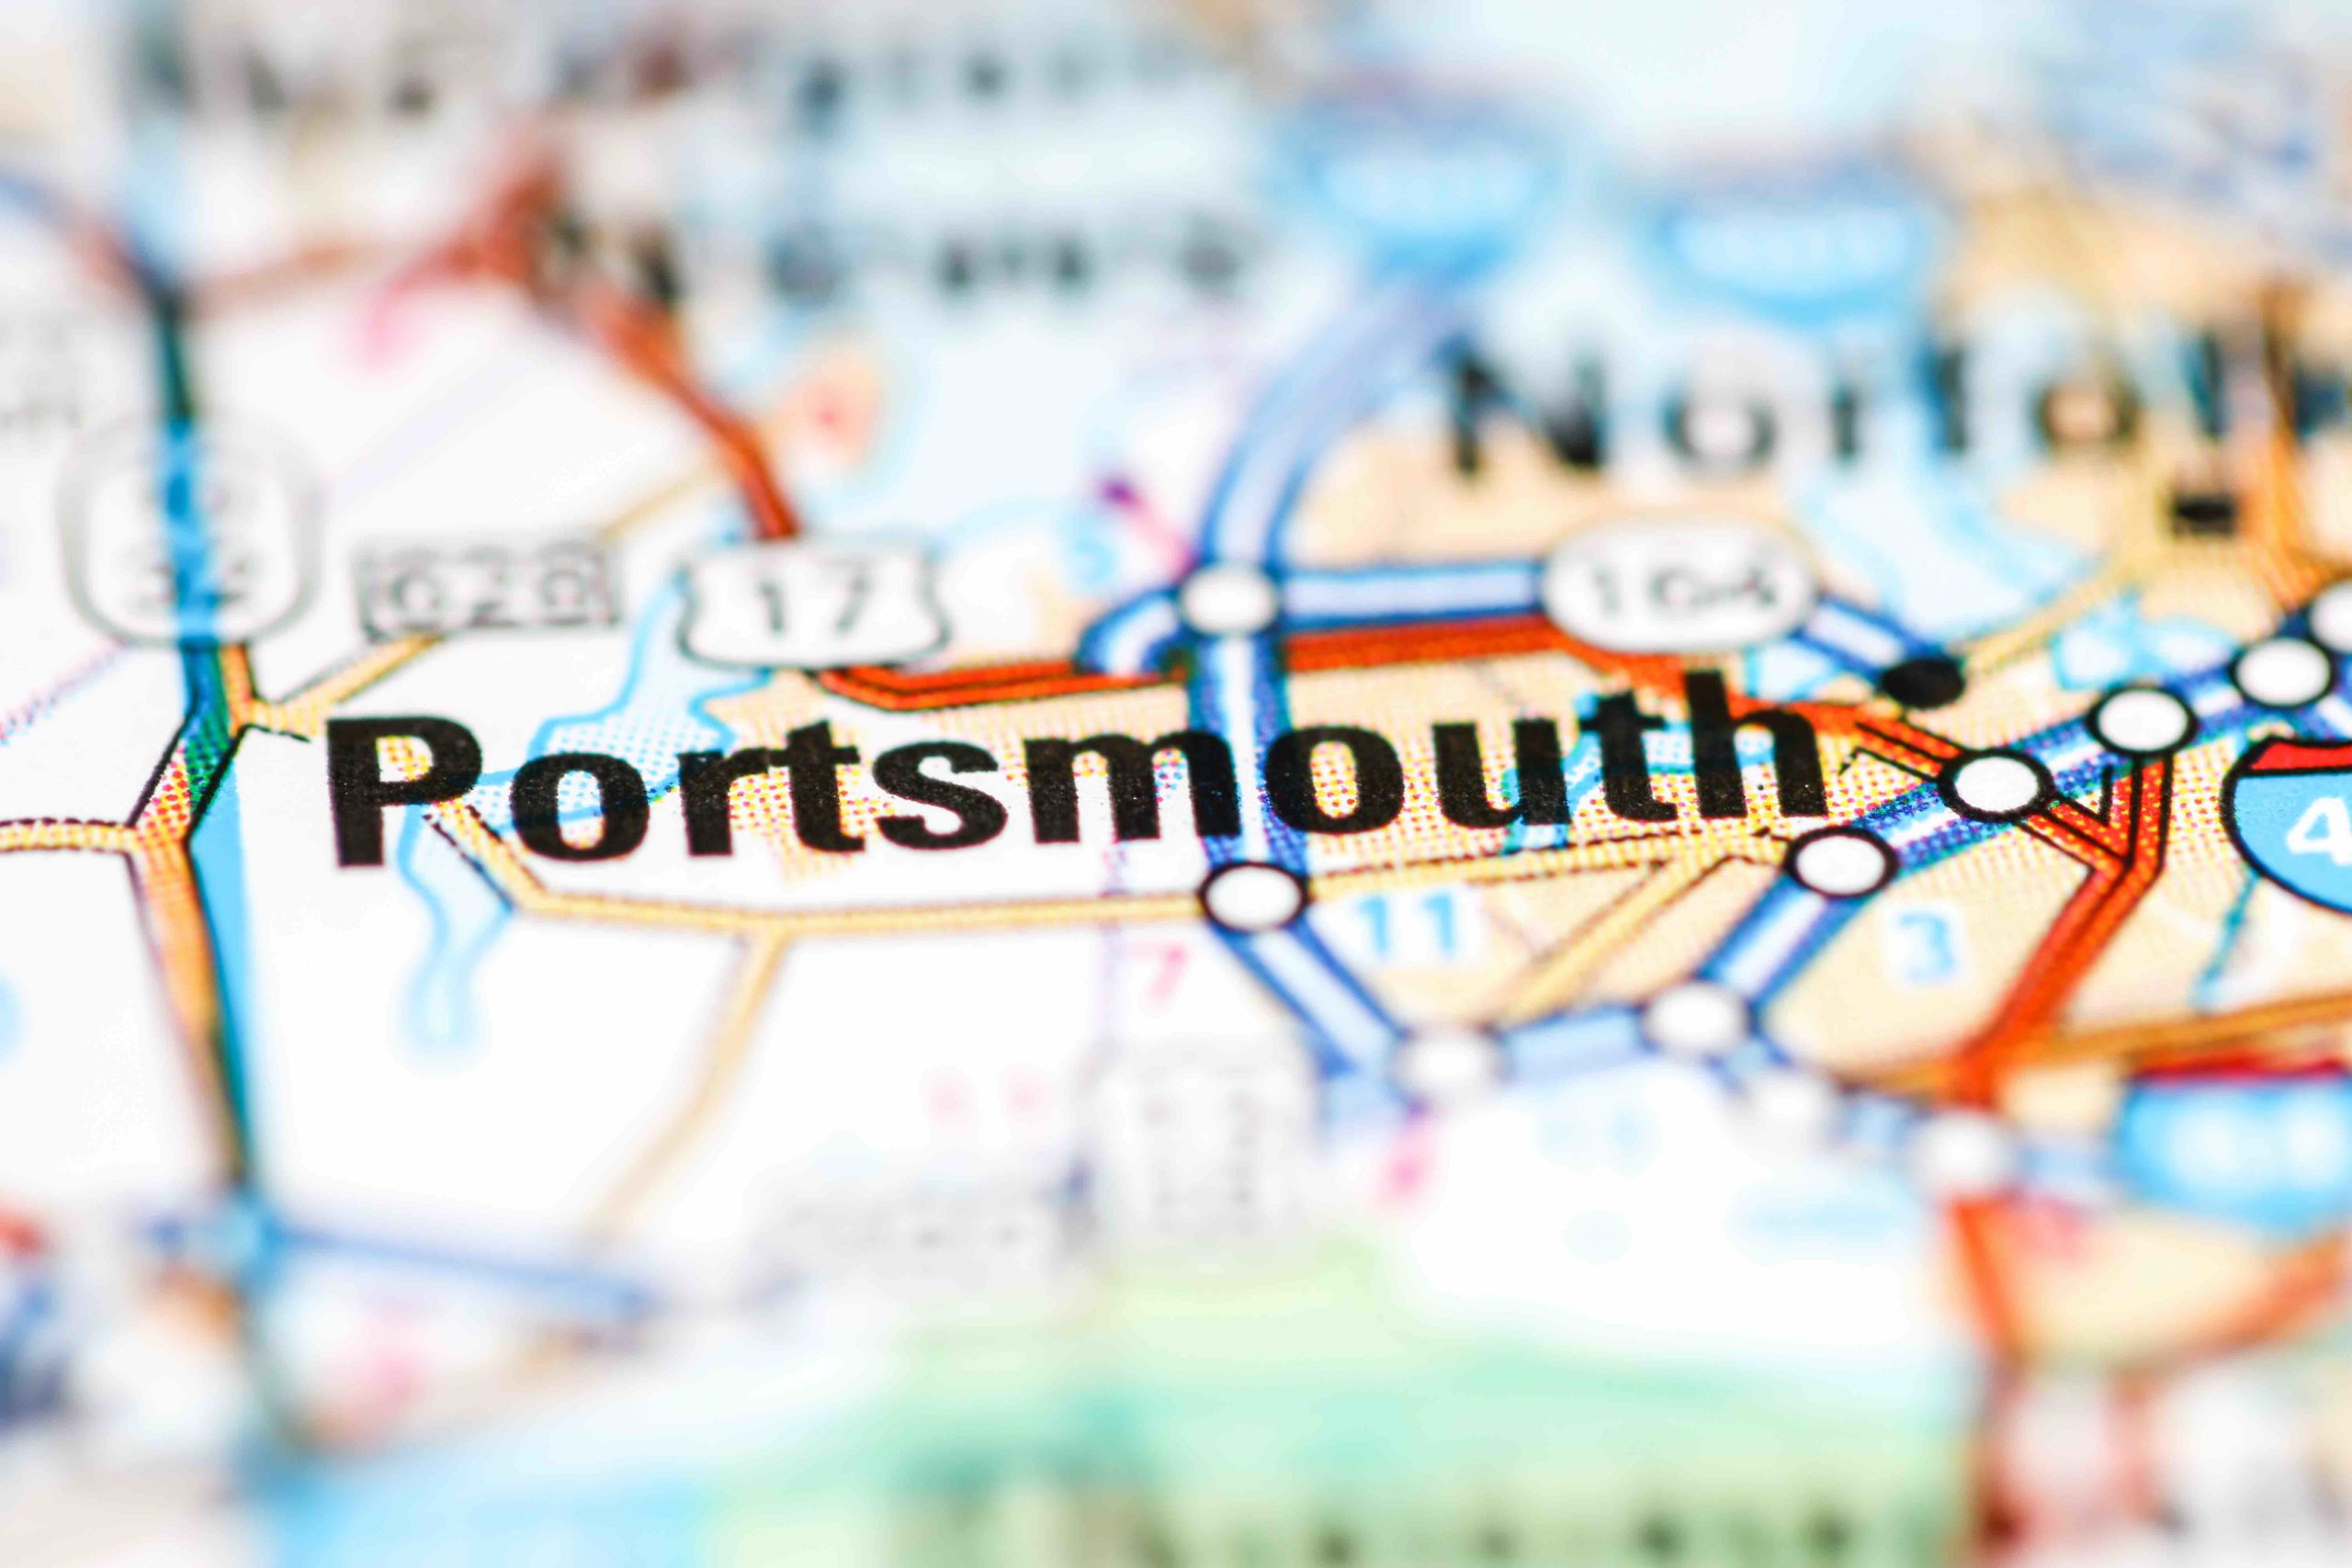 Portsmouth Virginia